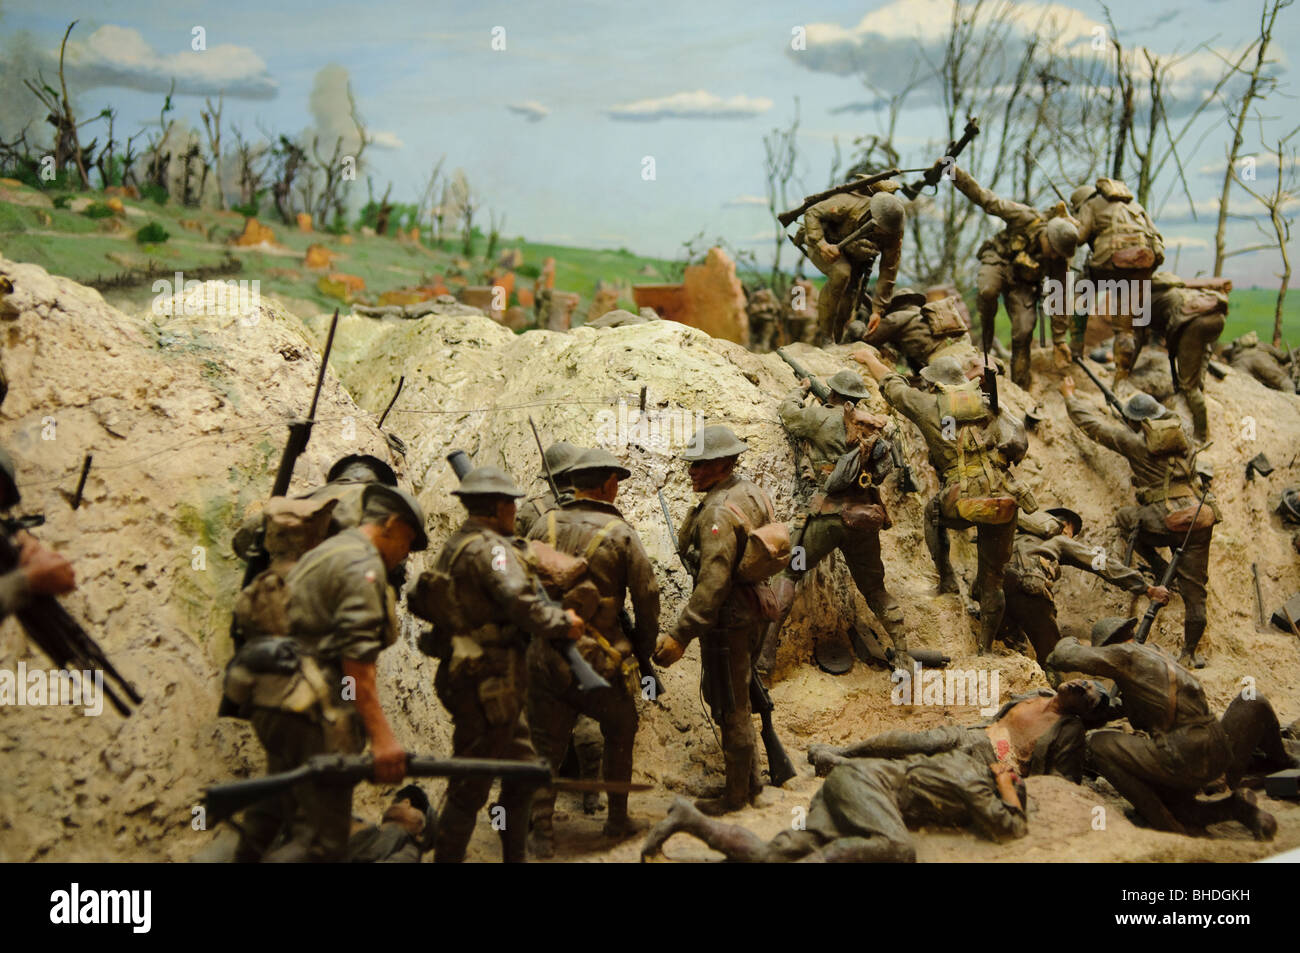 CANBERRA, Australia - Dioramas depicting famous battles involving Australian military forces. Australian War Memorial in Canberra, ACT, Australia Stock Photo